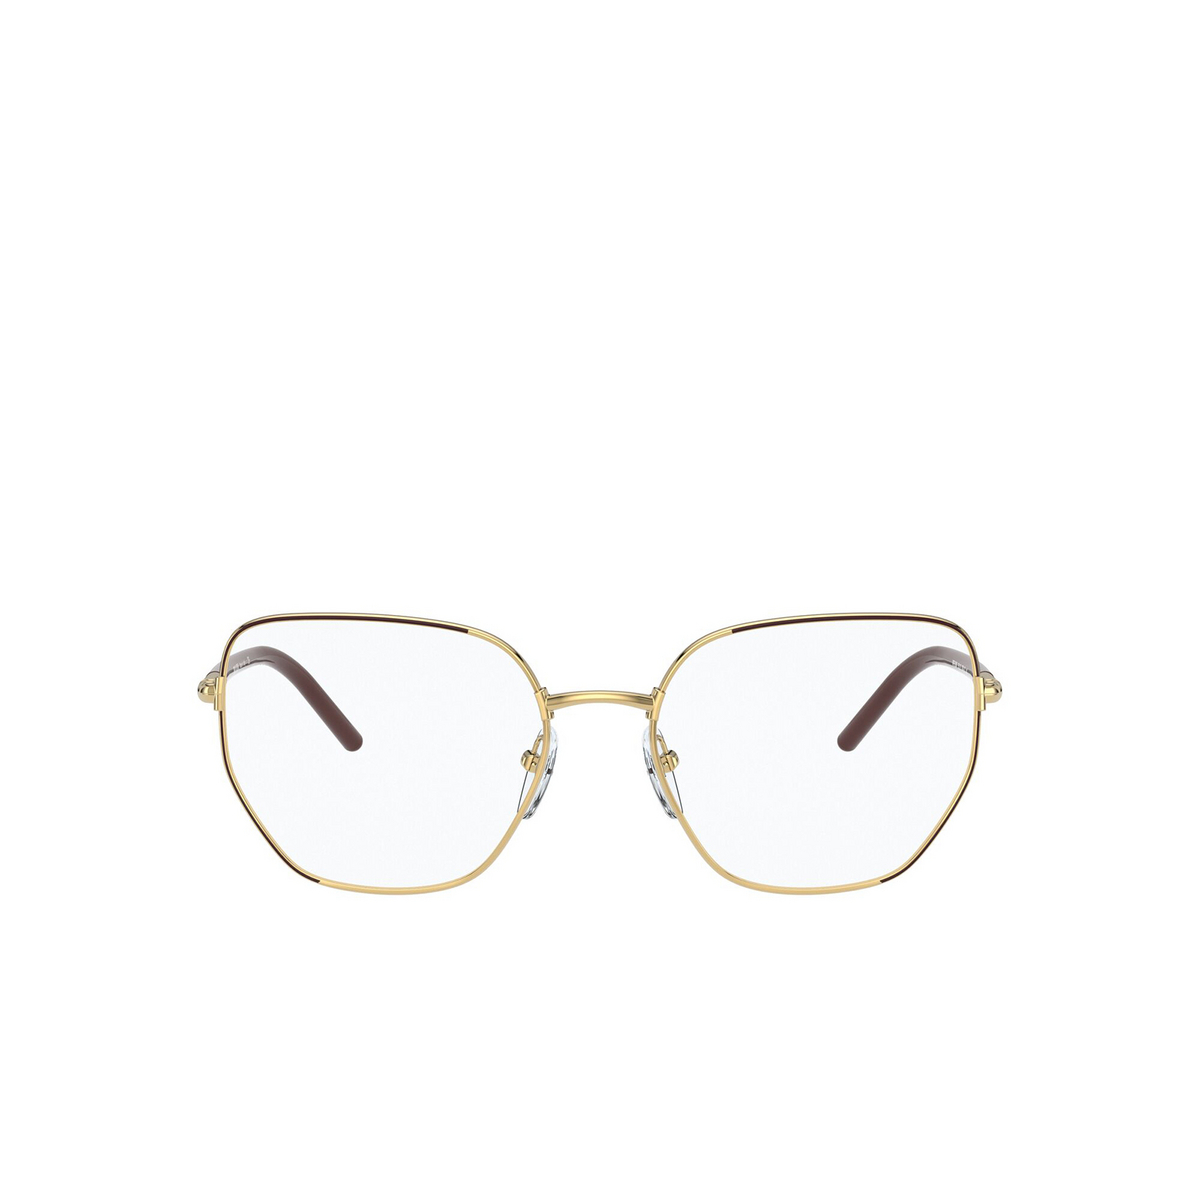 Prada® Irregular Eyeglasses: PR 60WV color Must / Gold 07M1O1 - front view.